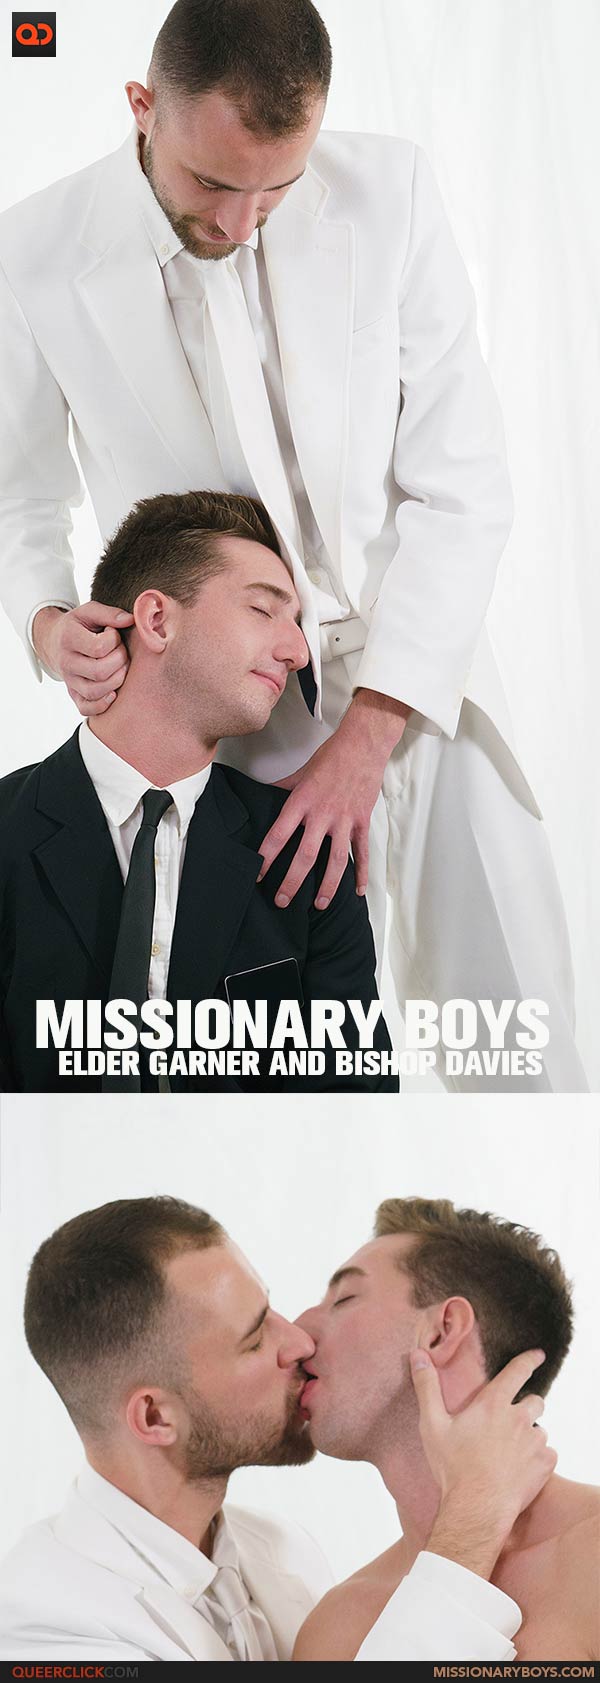 MissionaryBoys: Elder Garner and Bishop Davies - Ordination